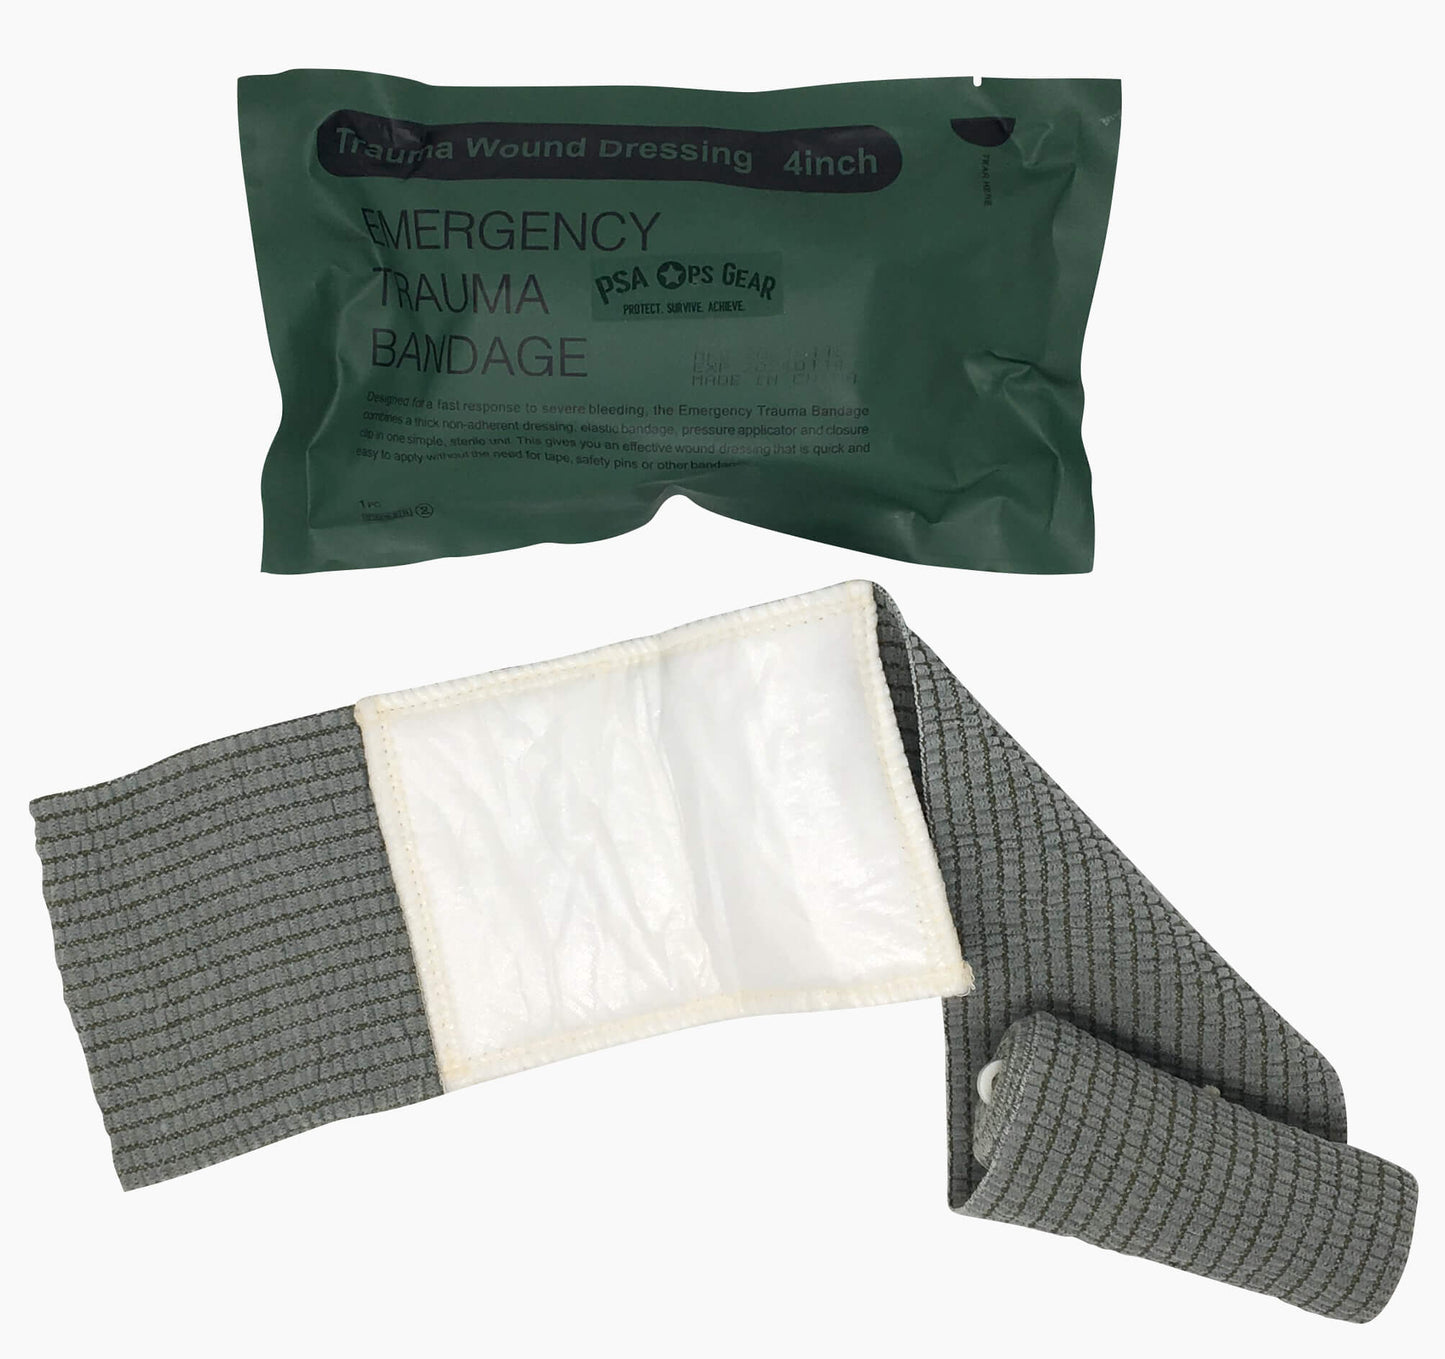 Emergency High Strength Pressure Bandages - Israeli Bandage